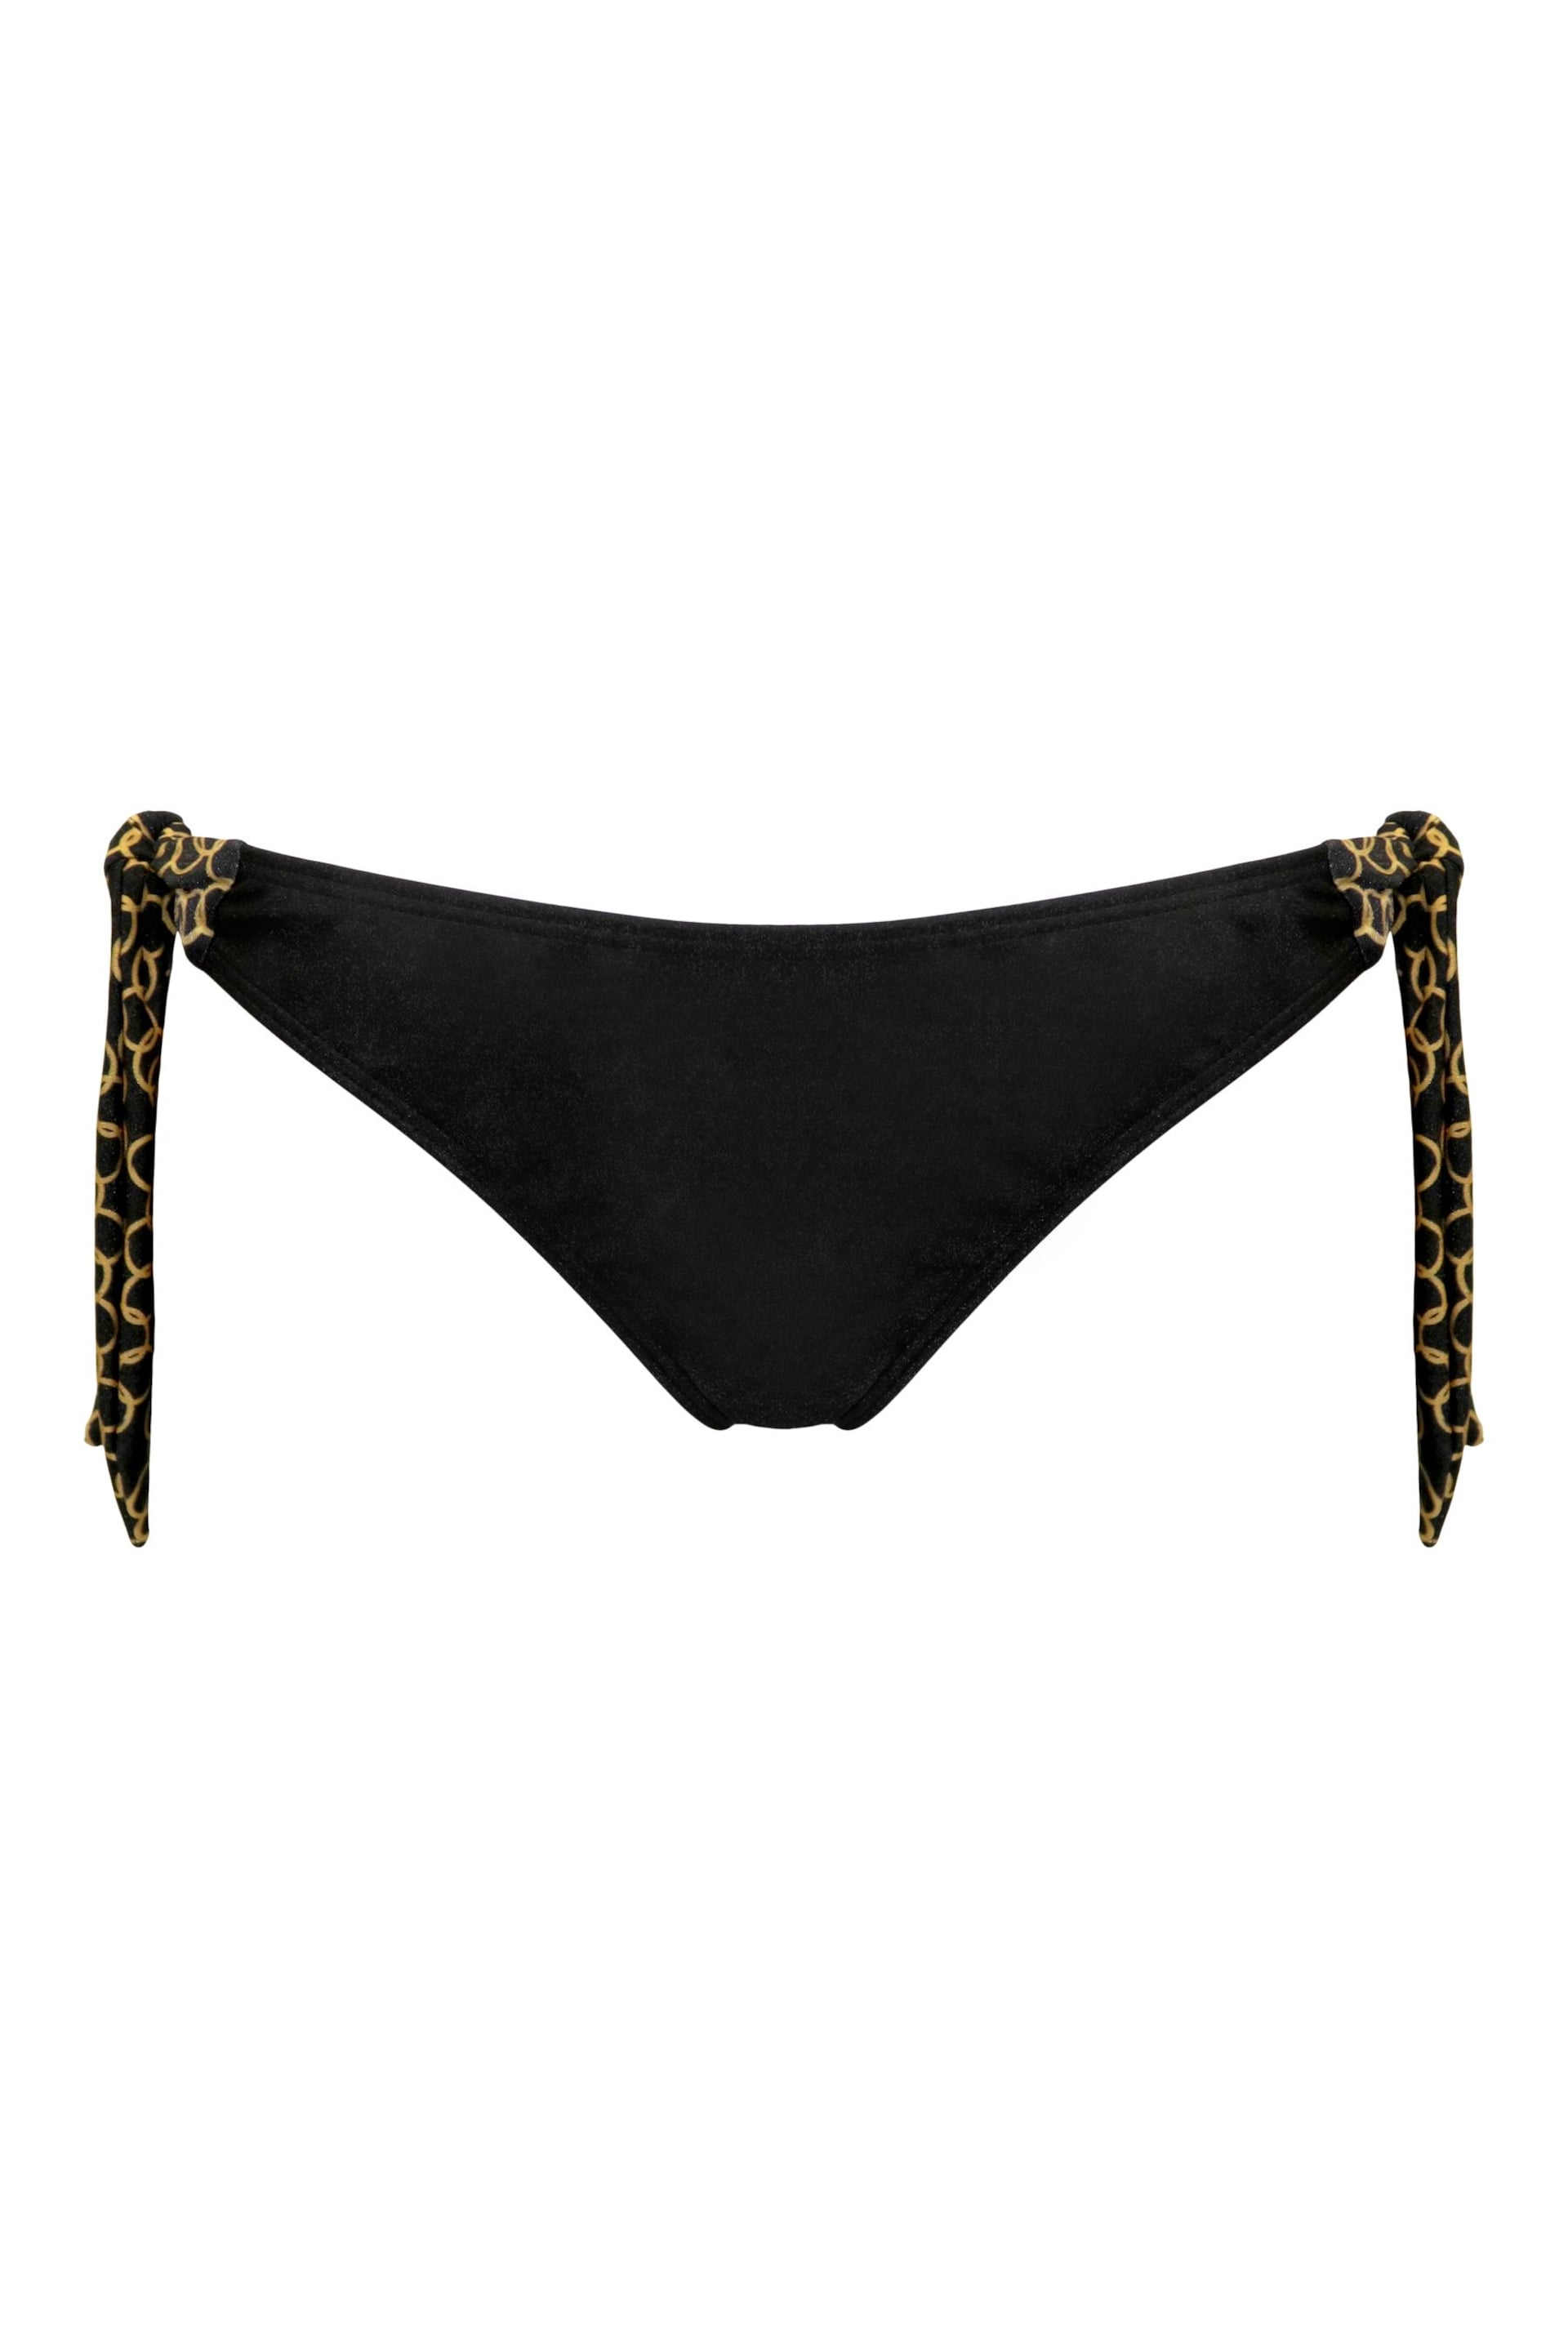 Pour Moi Black Casablanca Tie Side Bikini Briefs - Image 4 of 5